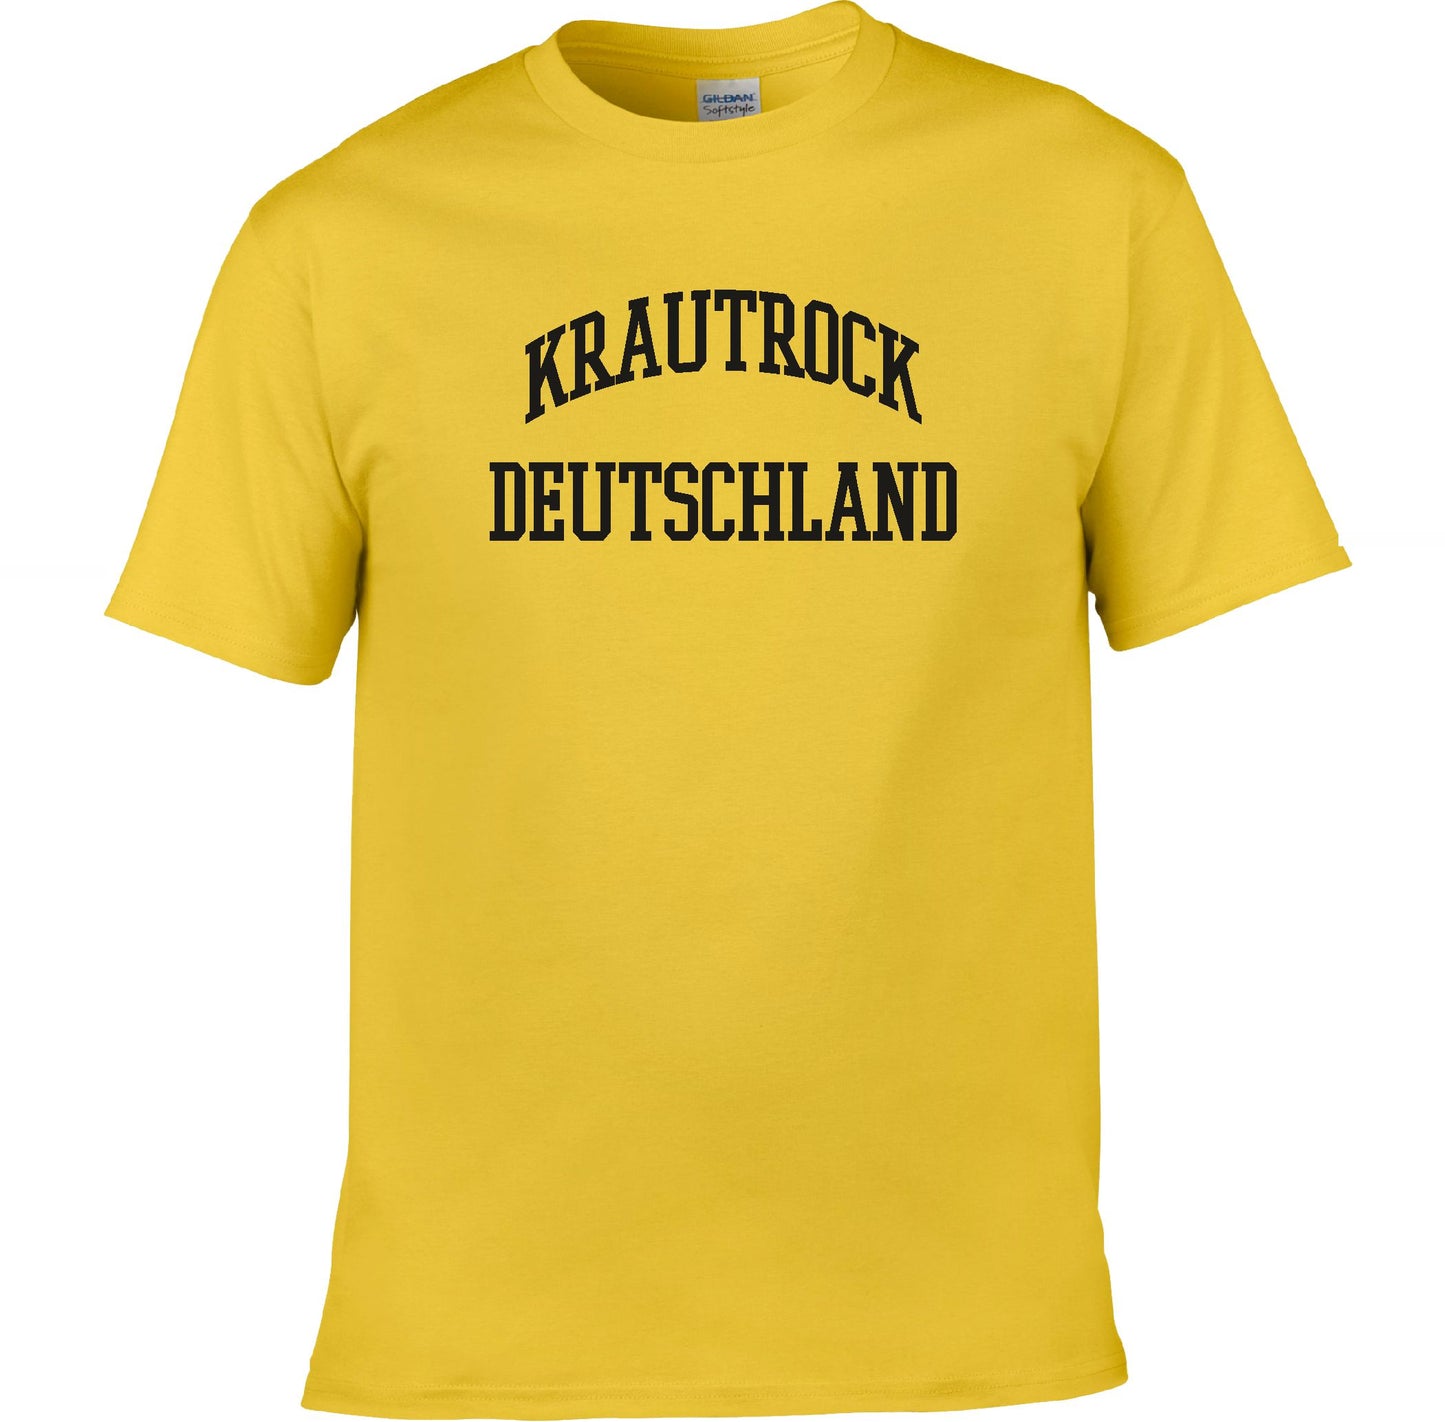 Krautrock Deutschland T-Shirt - 60s, 70s, German Rock, Various Colours